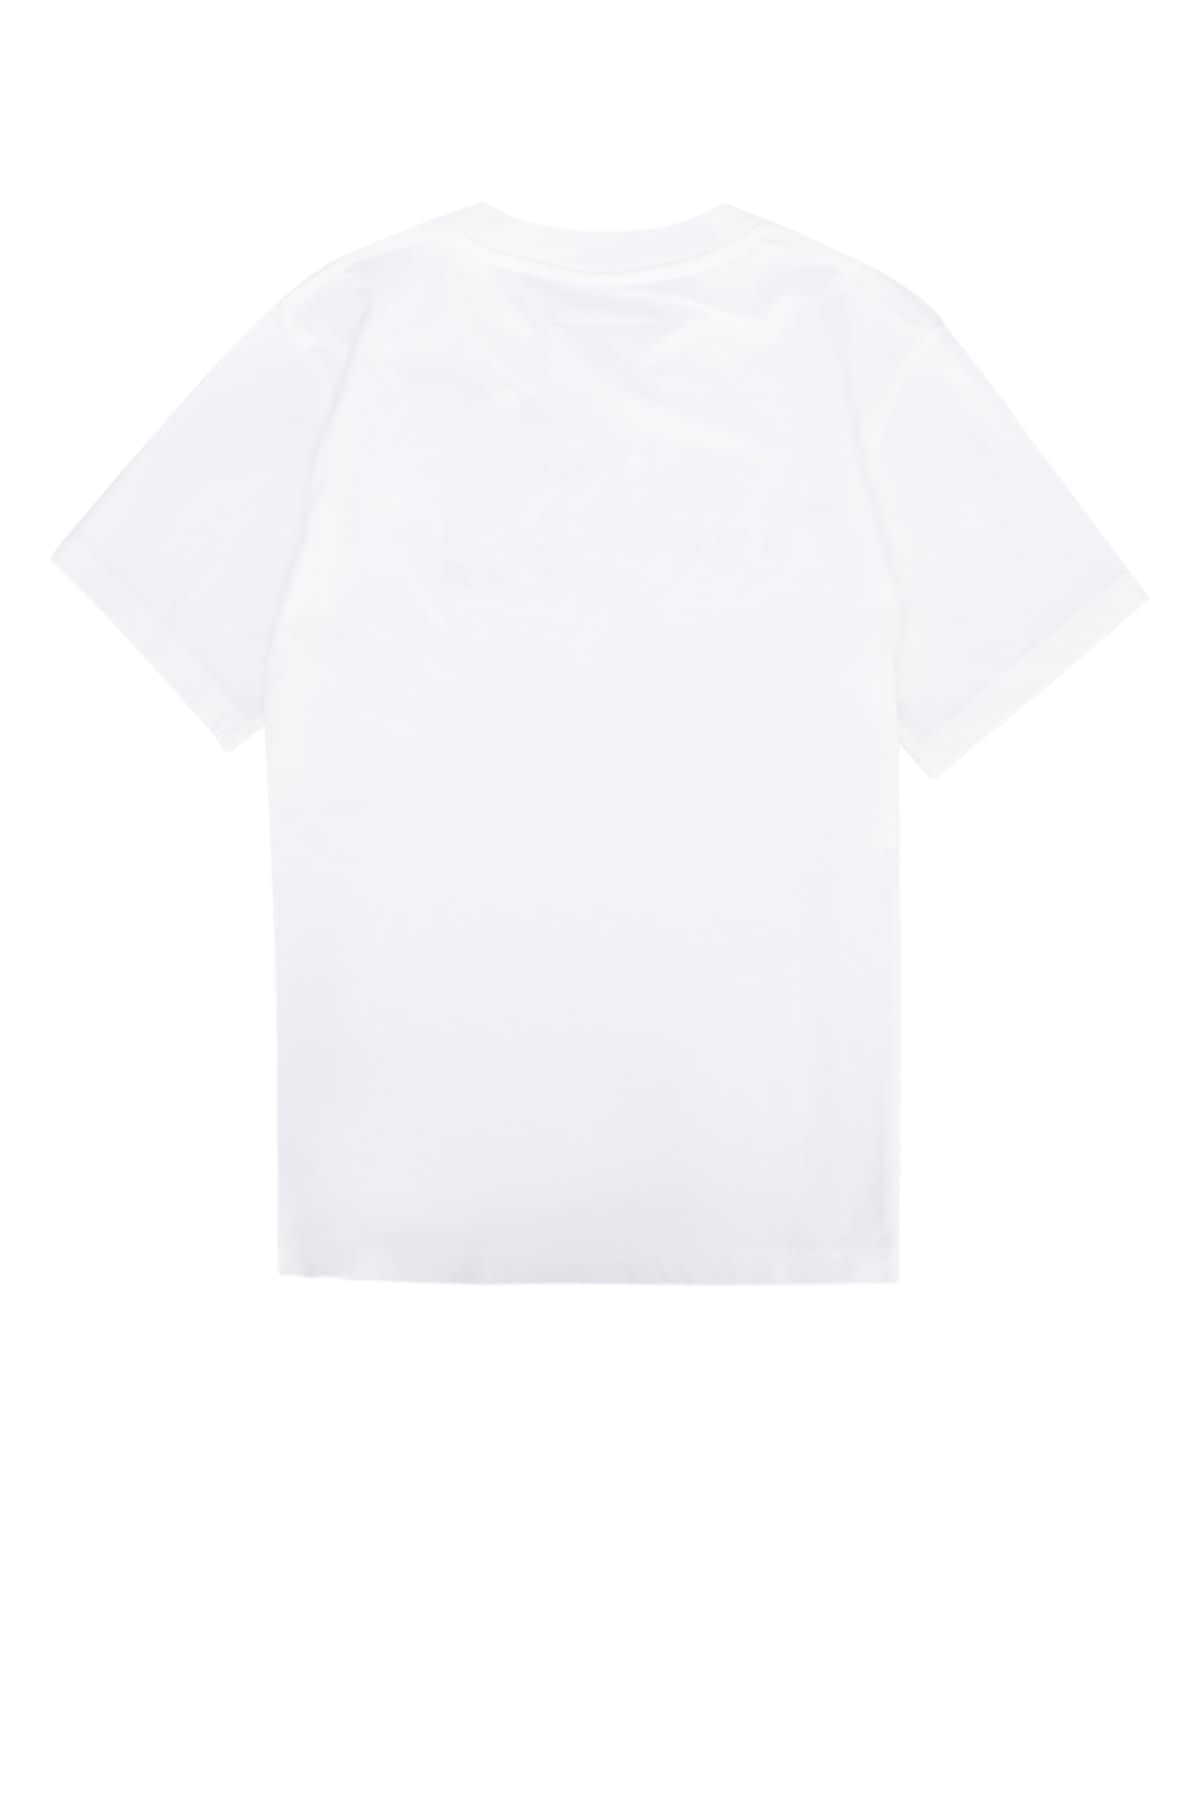 Mm6 Maison Margiela Kids' T-shirt In White